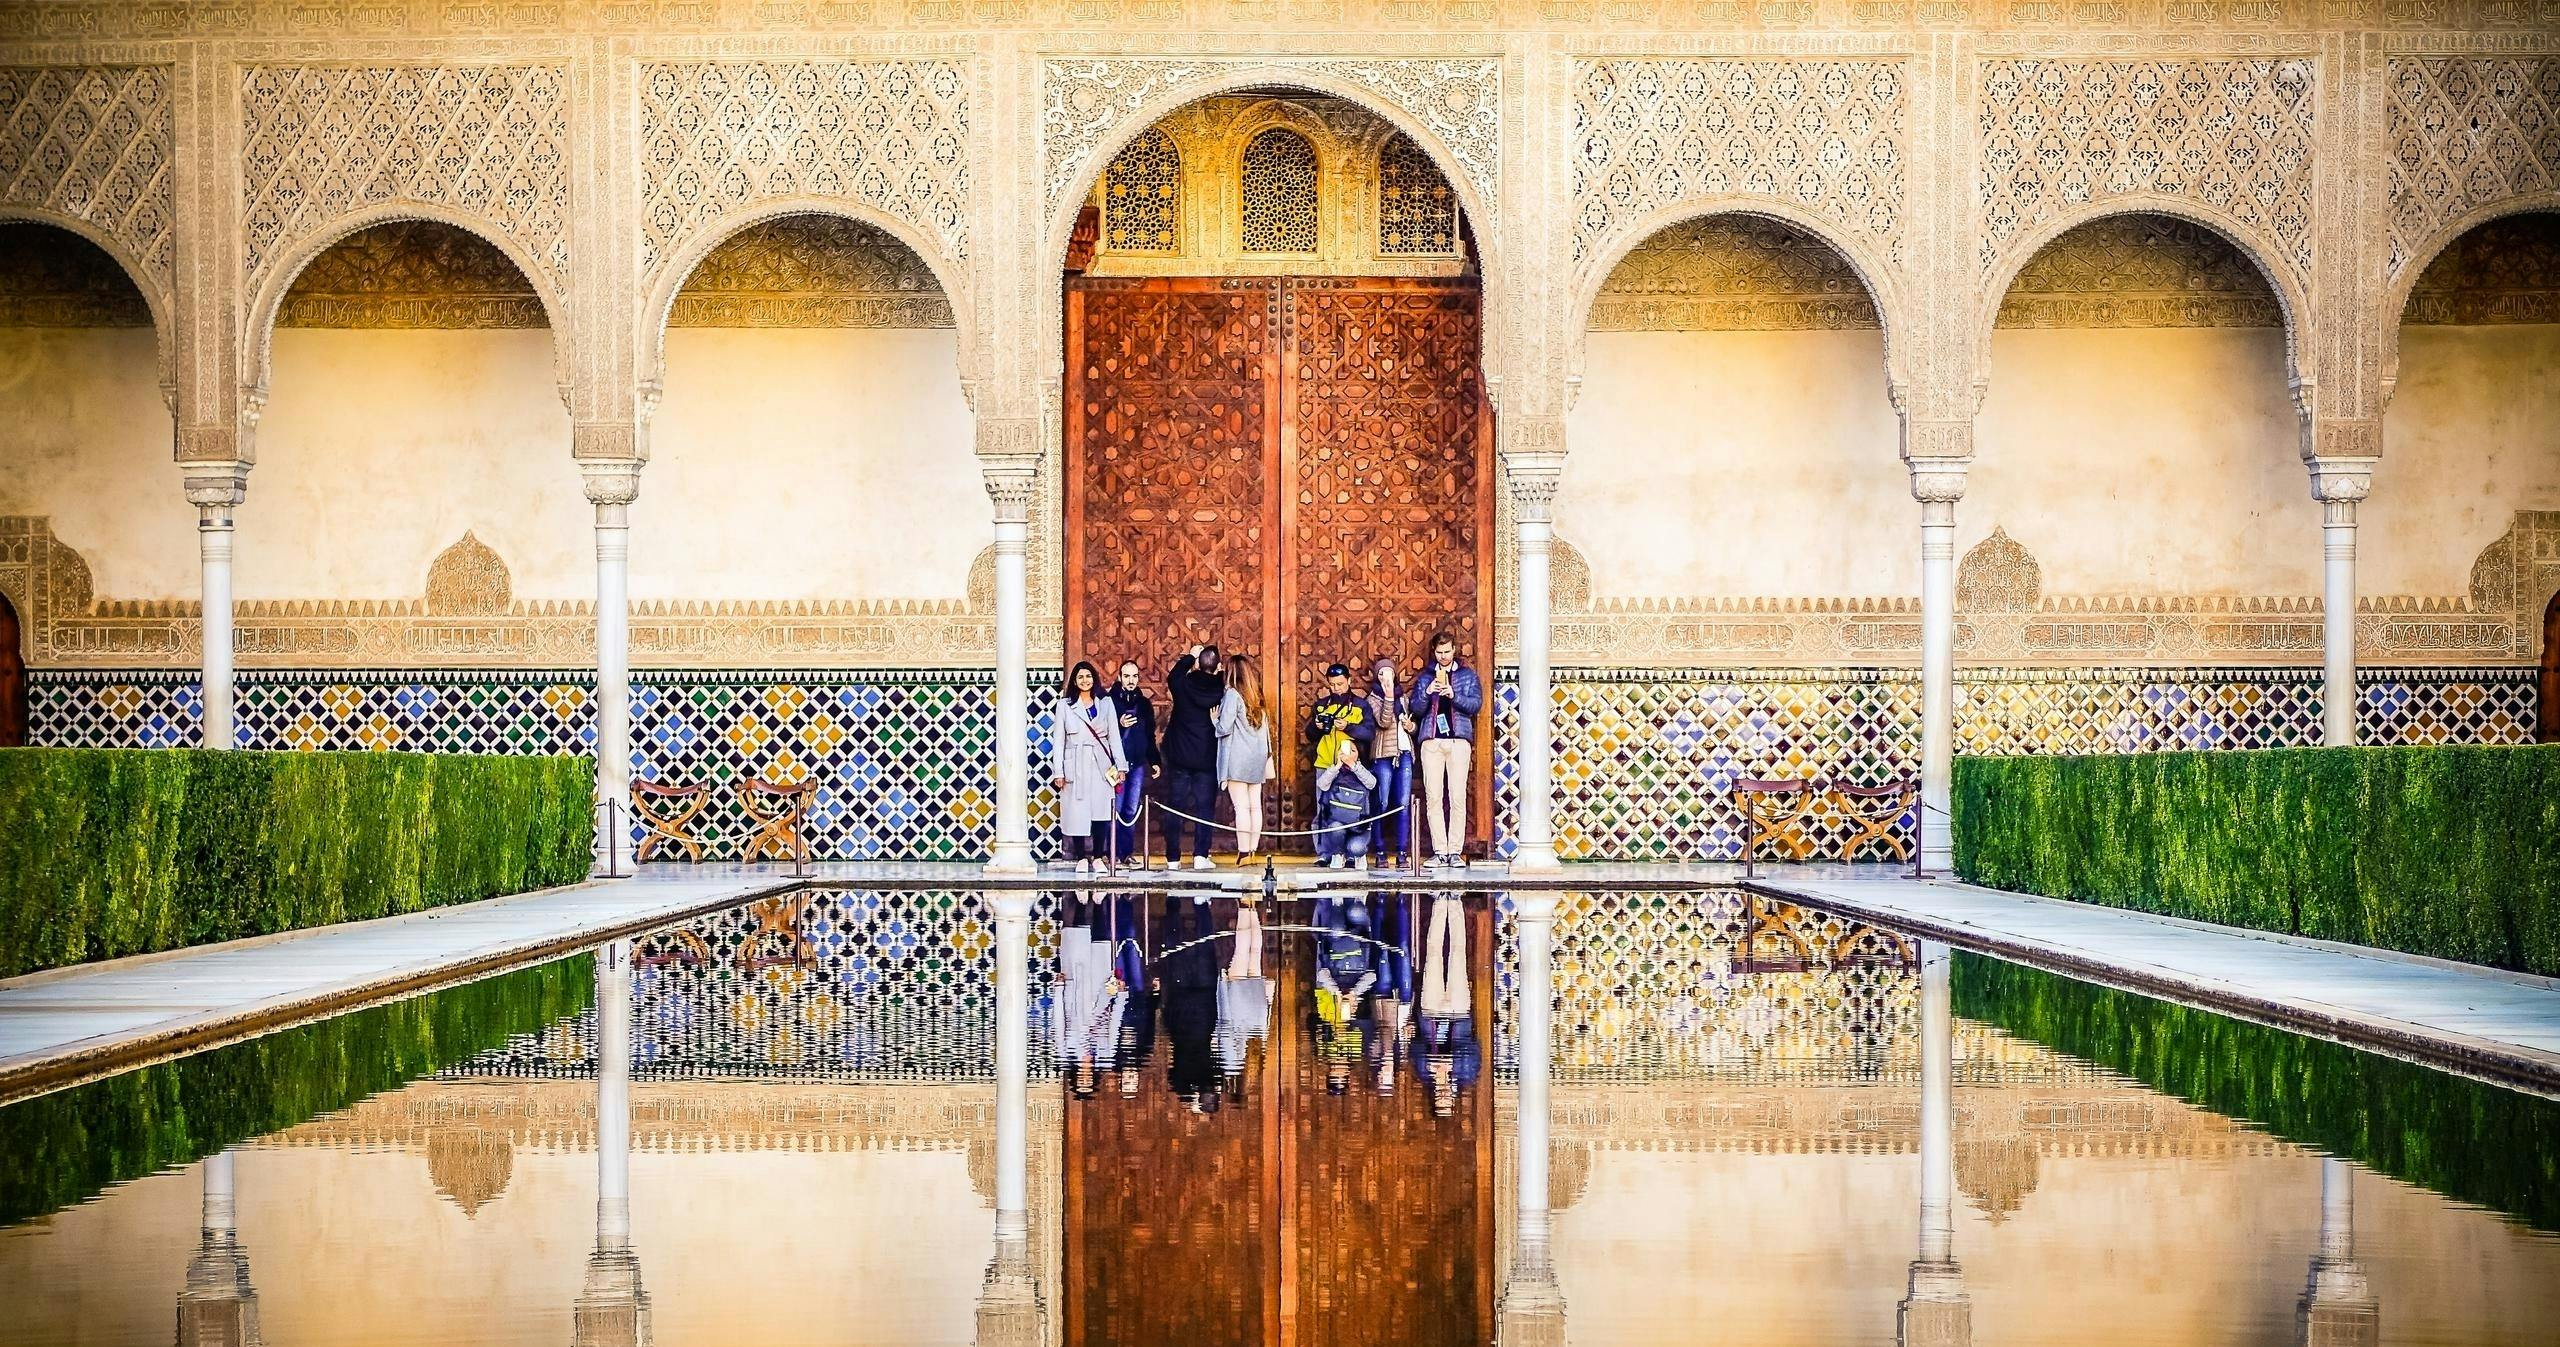 Bilhetes de entrada para a Alhambra de Granada e visita guiada